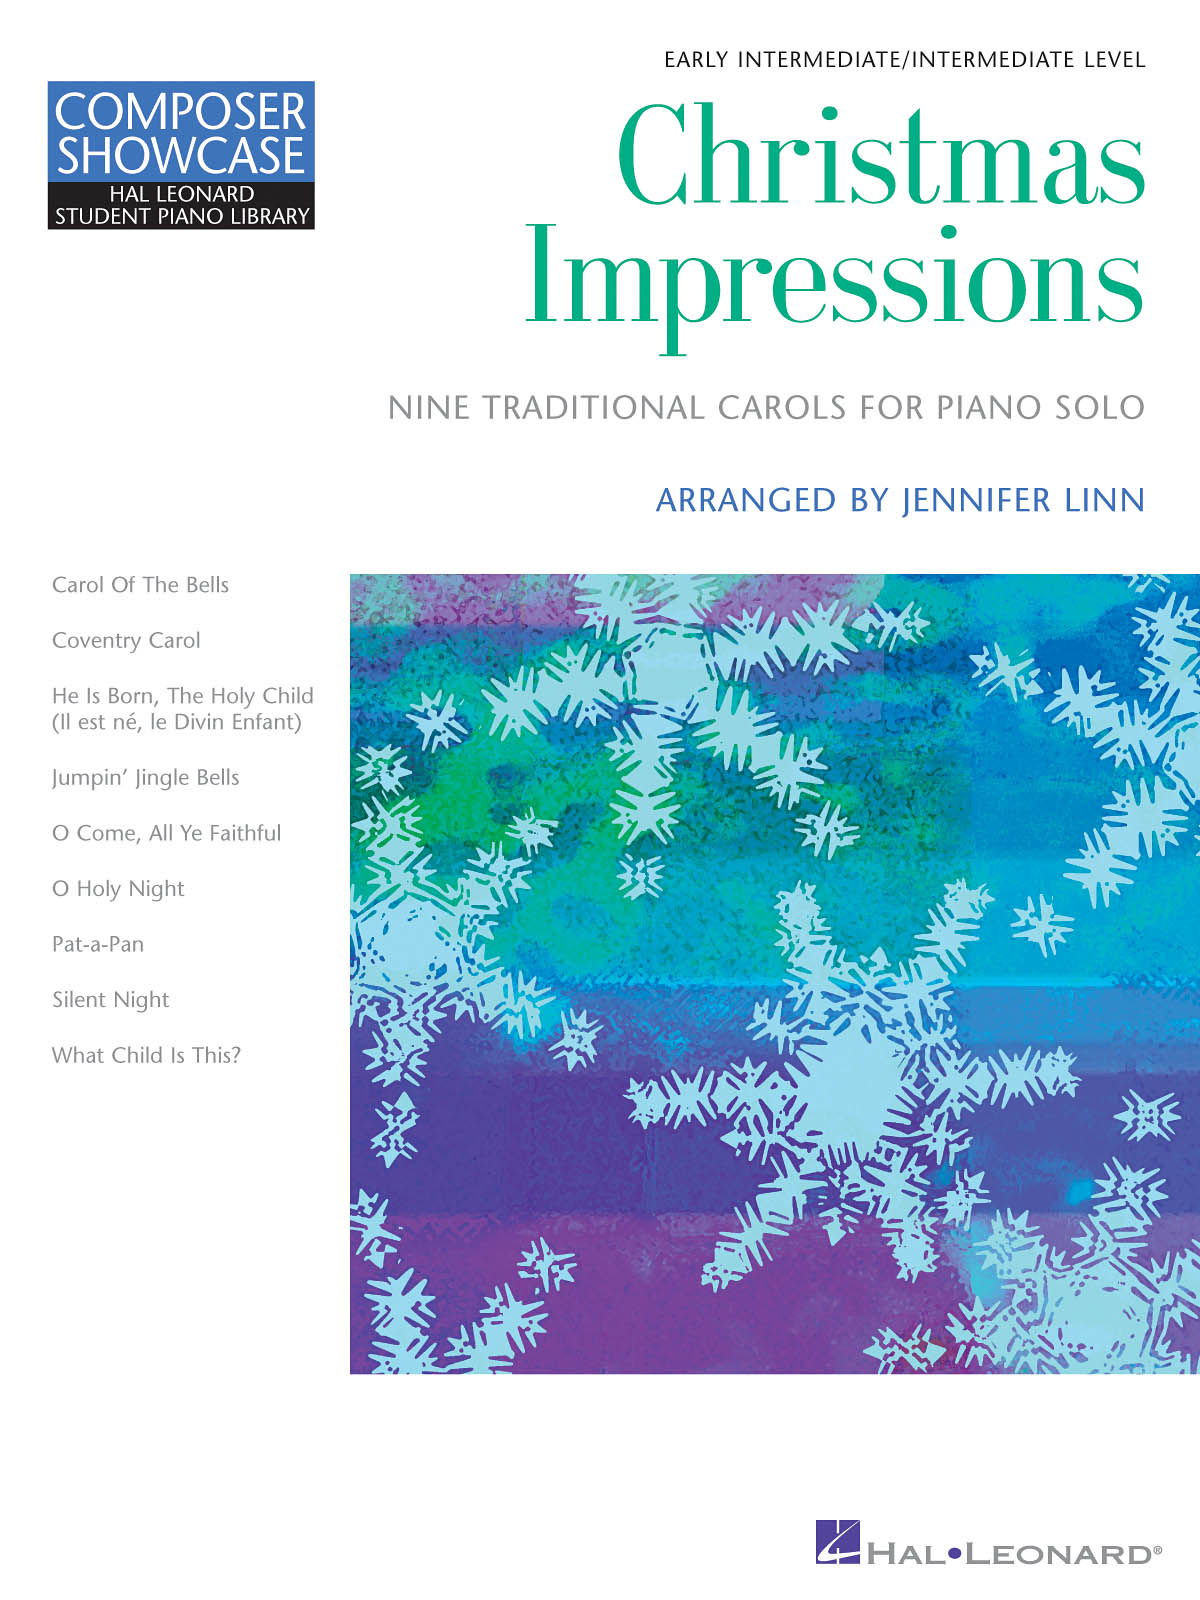 Christmas Impressions - Hal Leonard Student Piano Library Composer Showcase Intermediate Level - vánoční melodie pro klavír